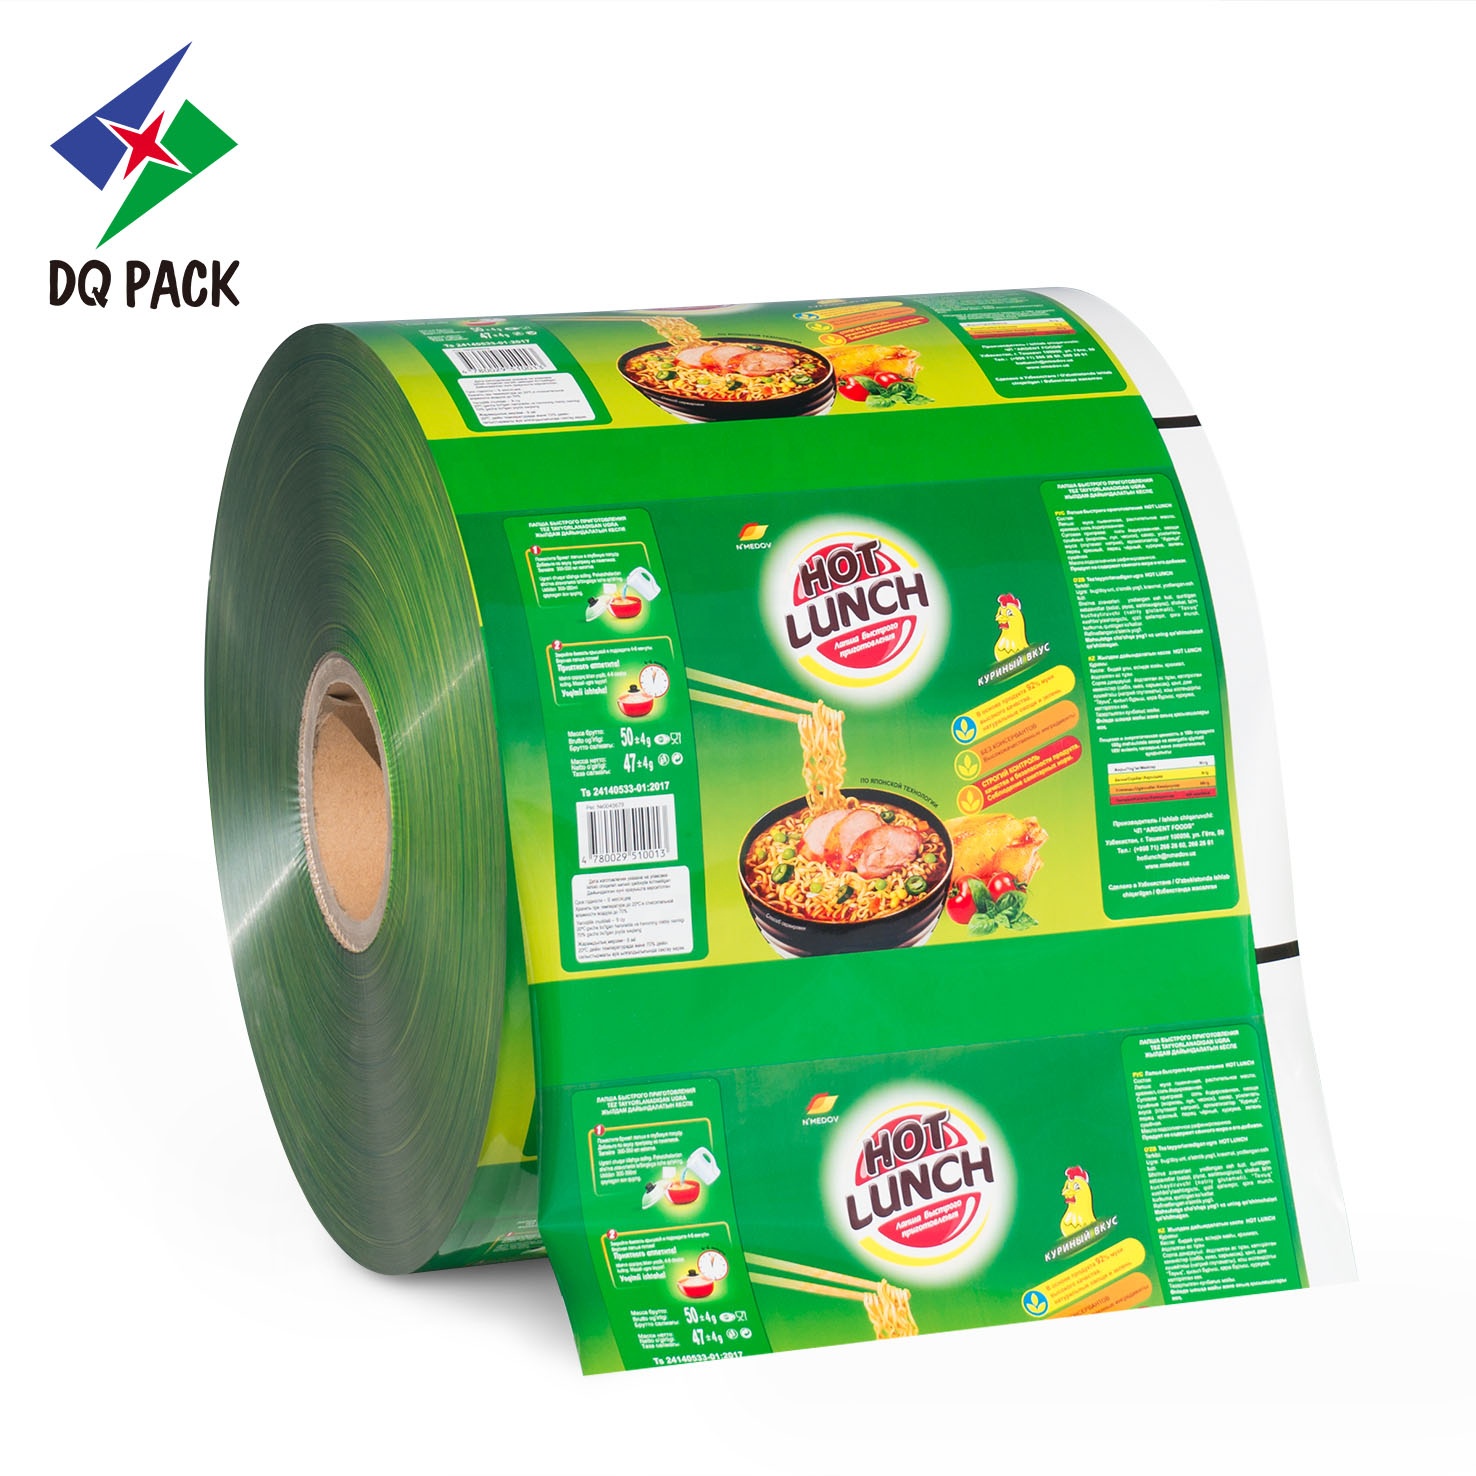 DQ PACK Custom Print Foil Fried Noodles Food Packaging Film roll